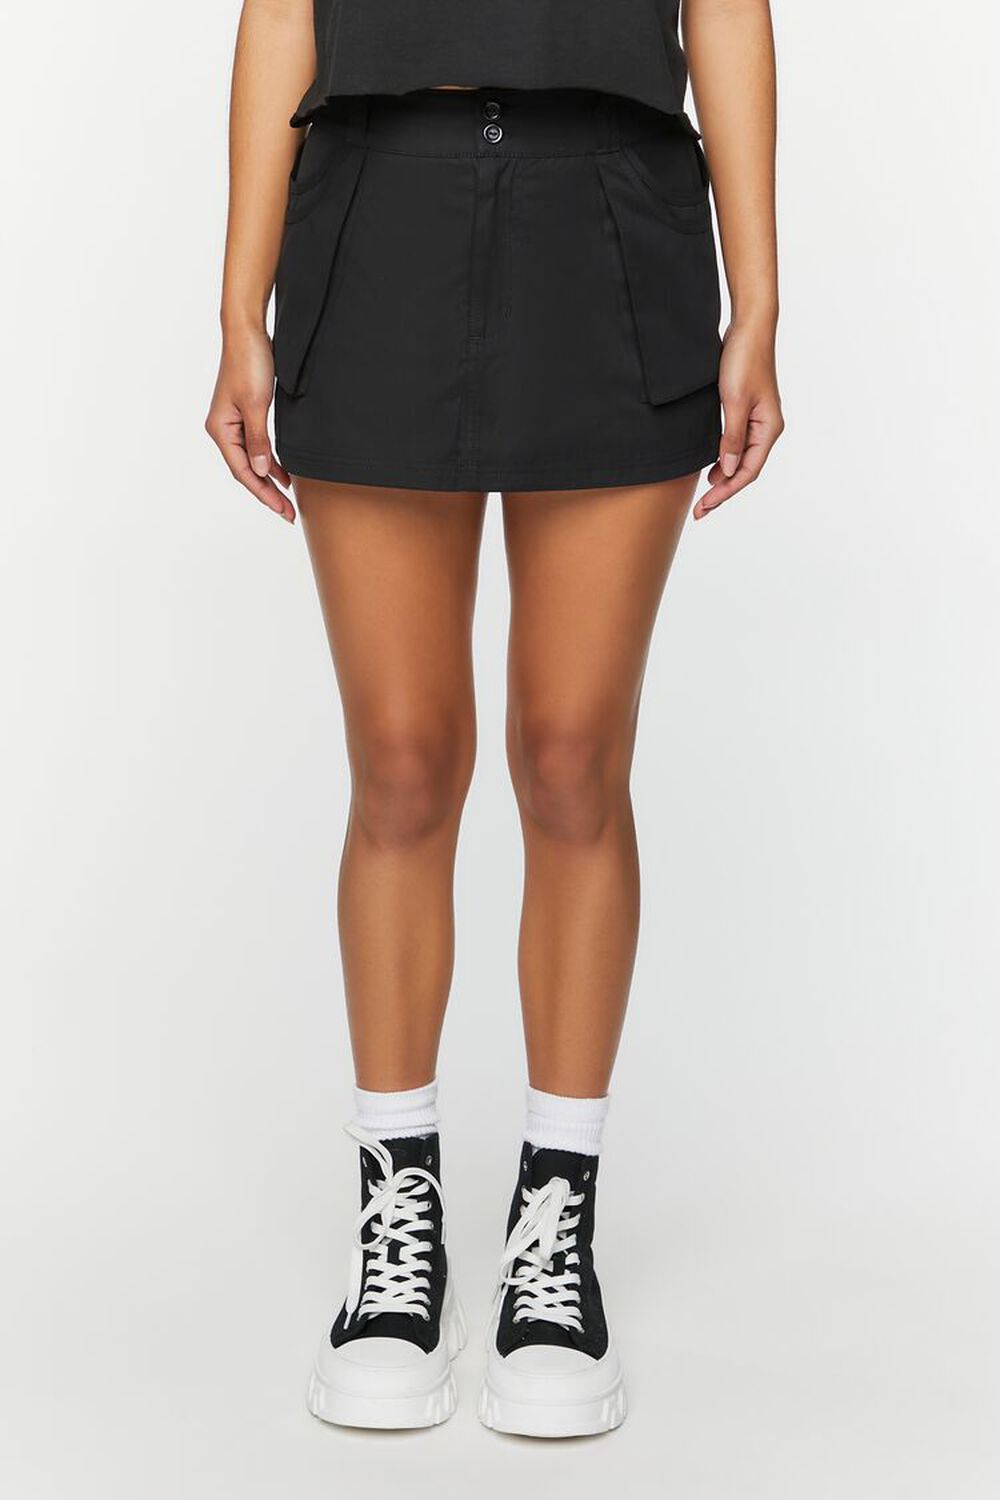 BLACK Patch Pocket A-Line Mini Skirt, image 2